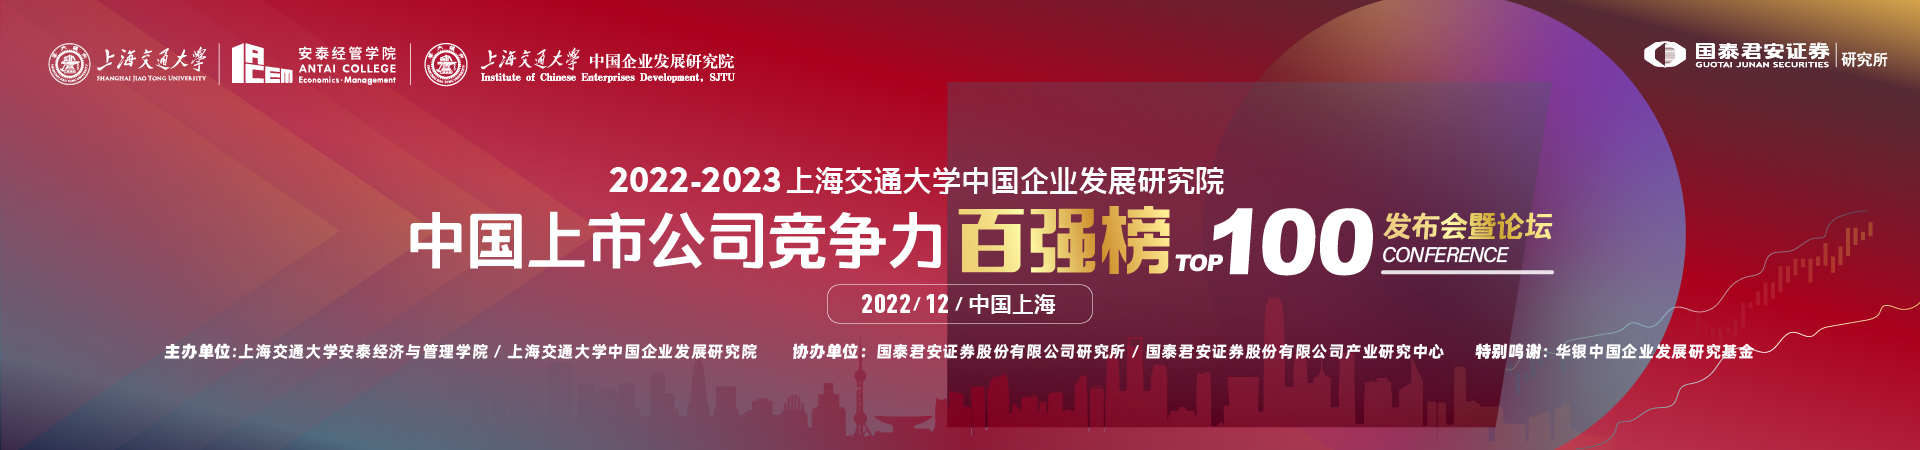 2022-2023竞争力百强榜